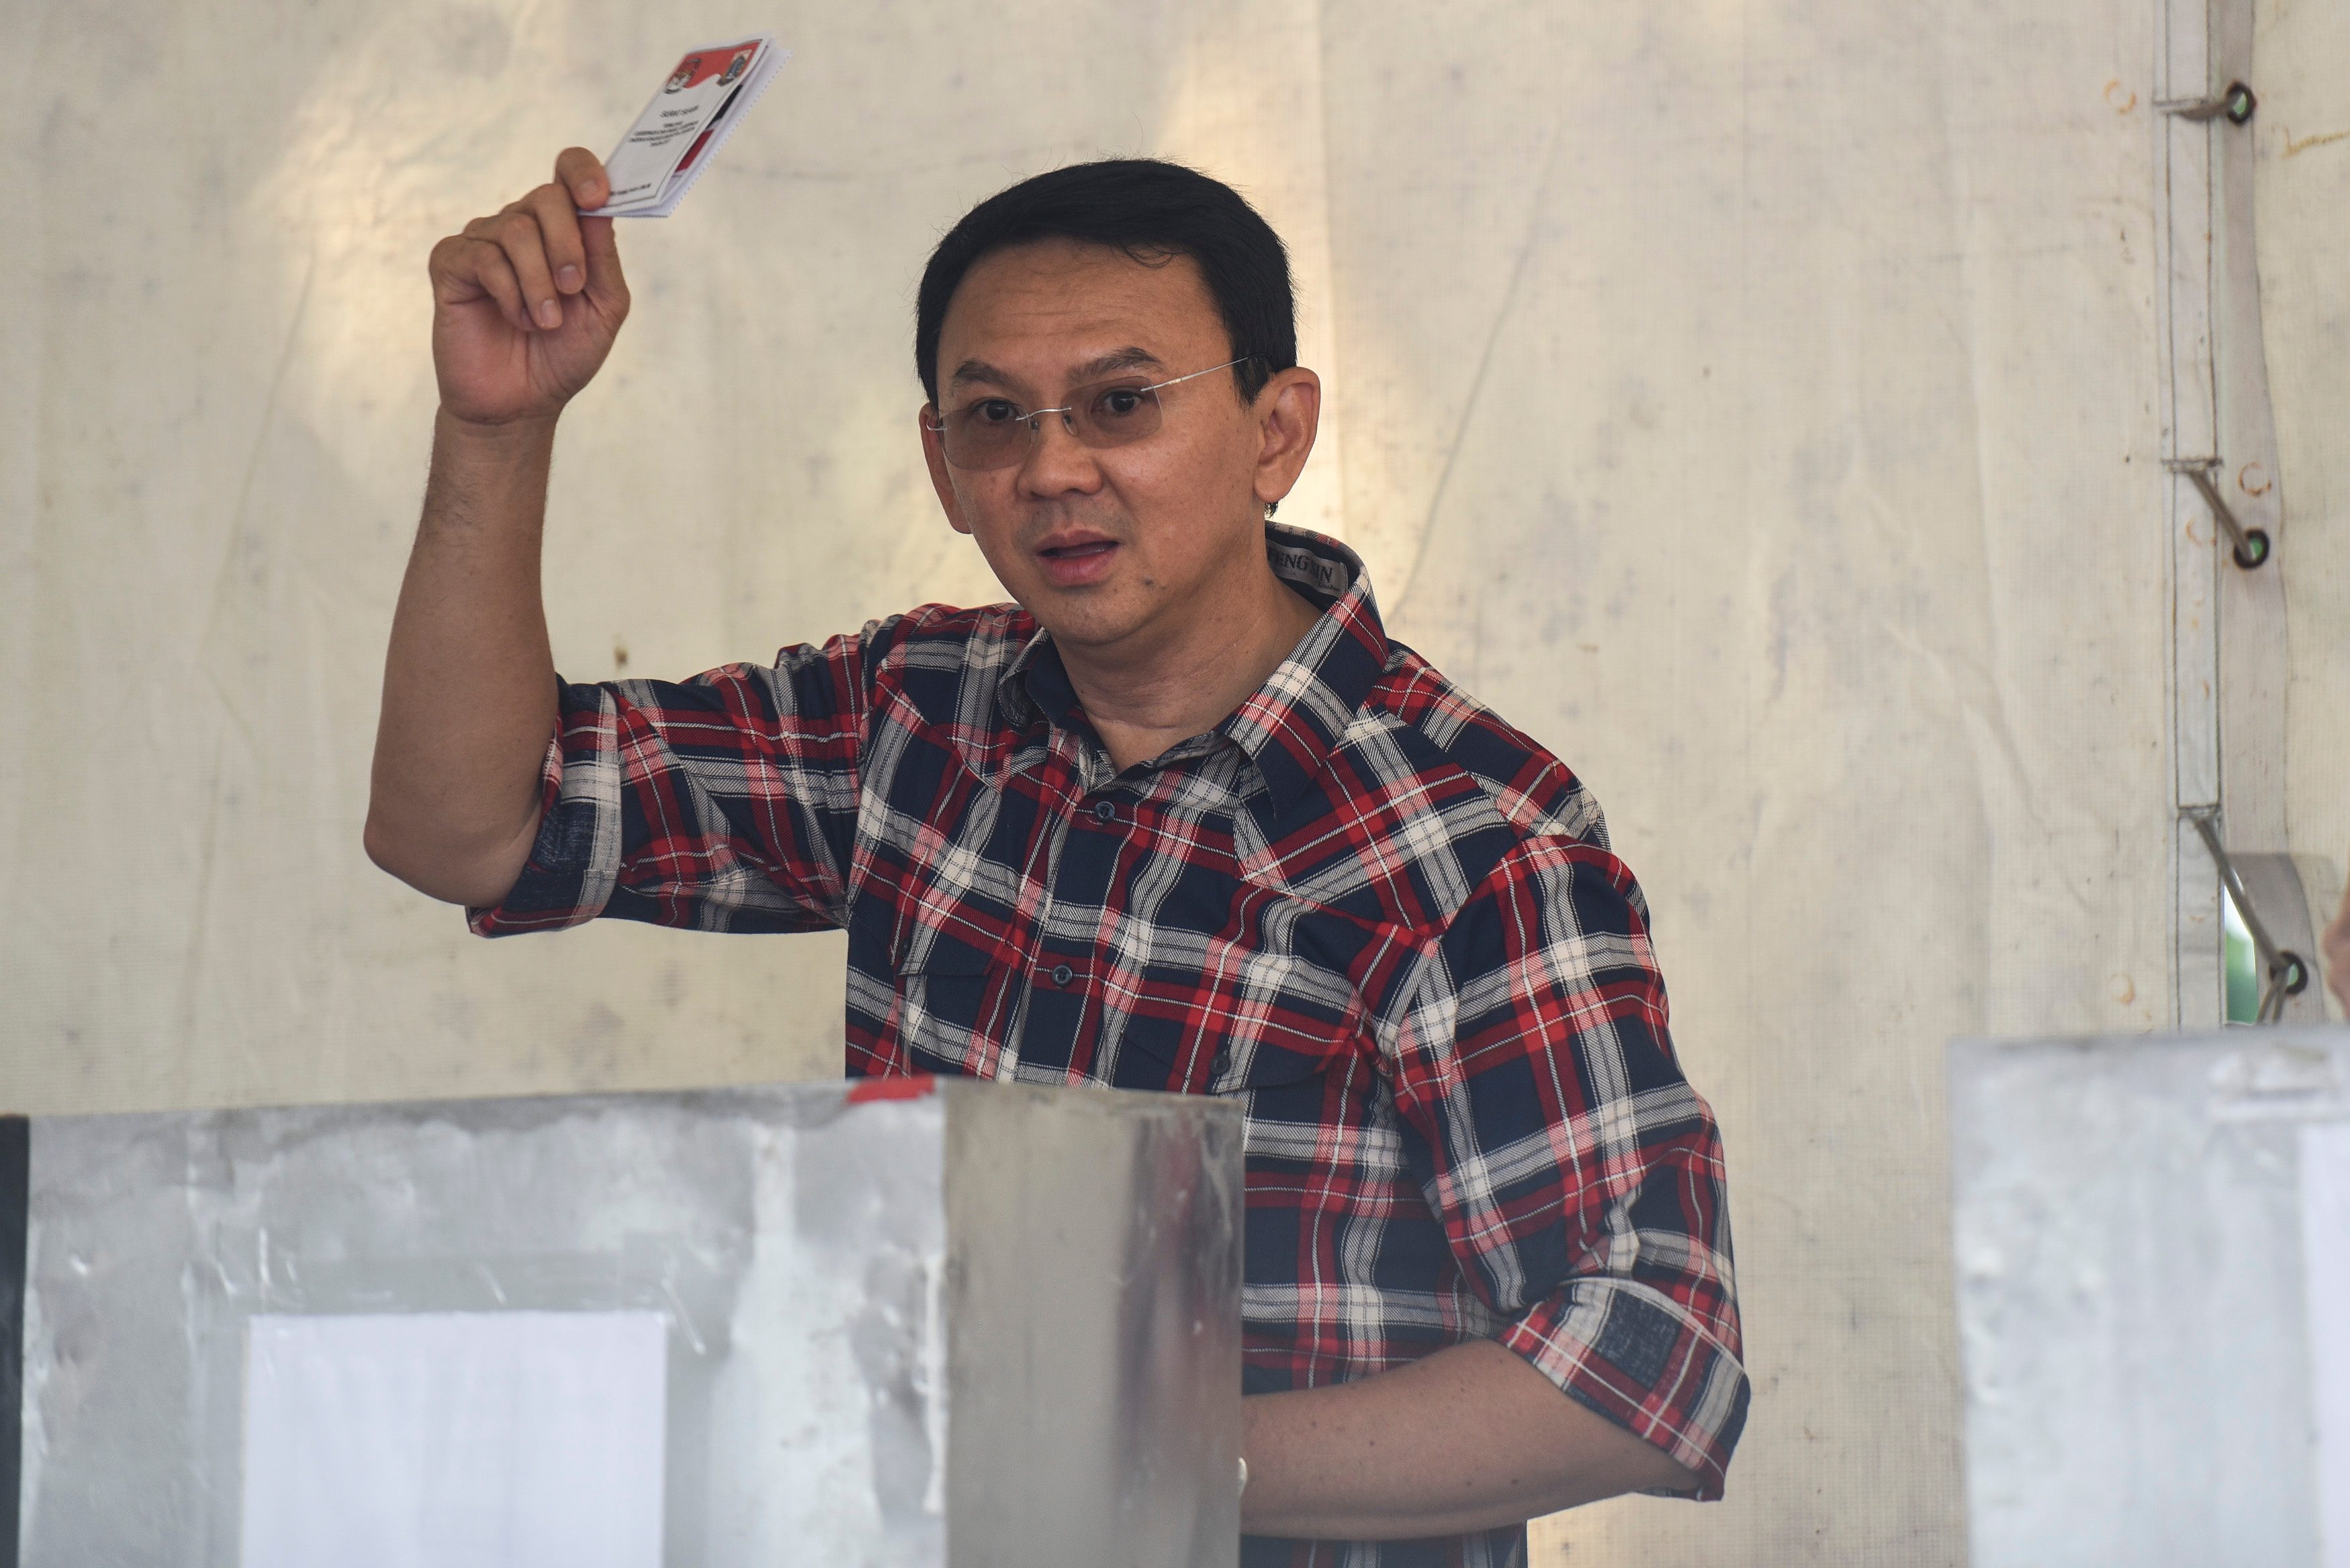 Cagub DKI Jakarta nomor urut dua, Ahok, menunjukkan surat suara saat melakukan pencoblosan di TPS 54 kawasan Pantai Mutiara, Pluit, pada 15 Februari 2017. Foto oleh Hafidz Mubarak A./Antara 